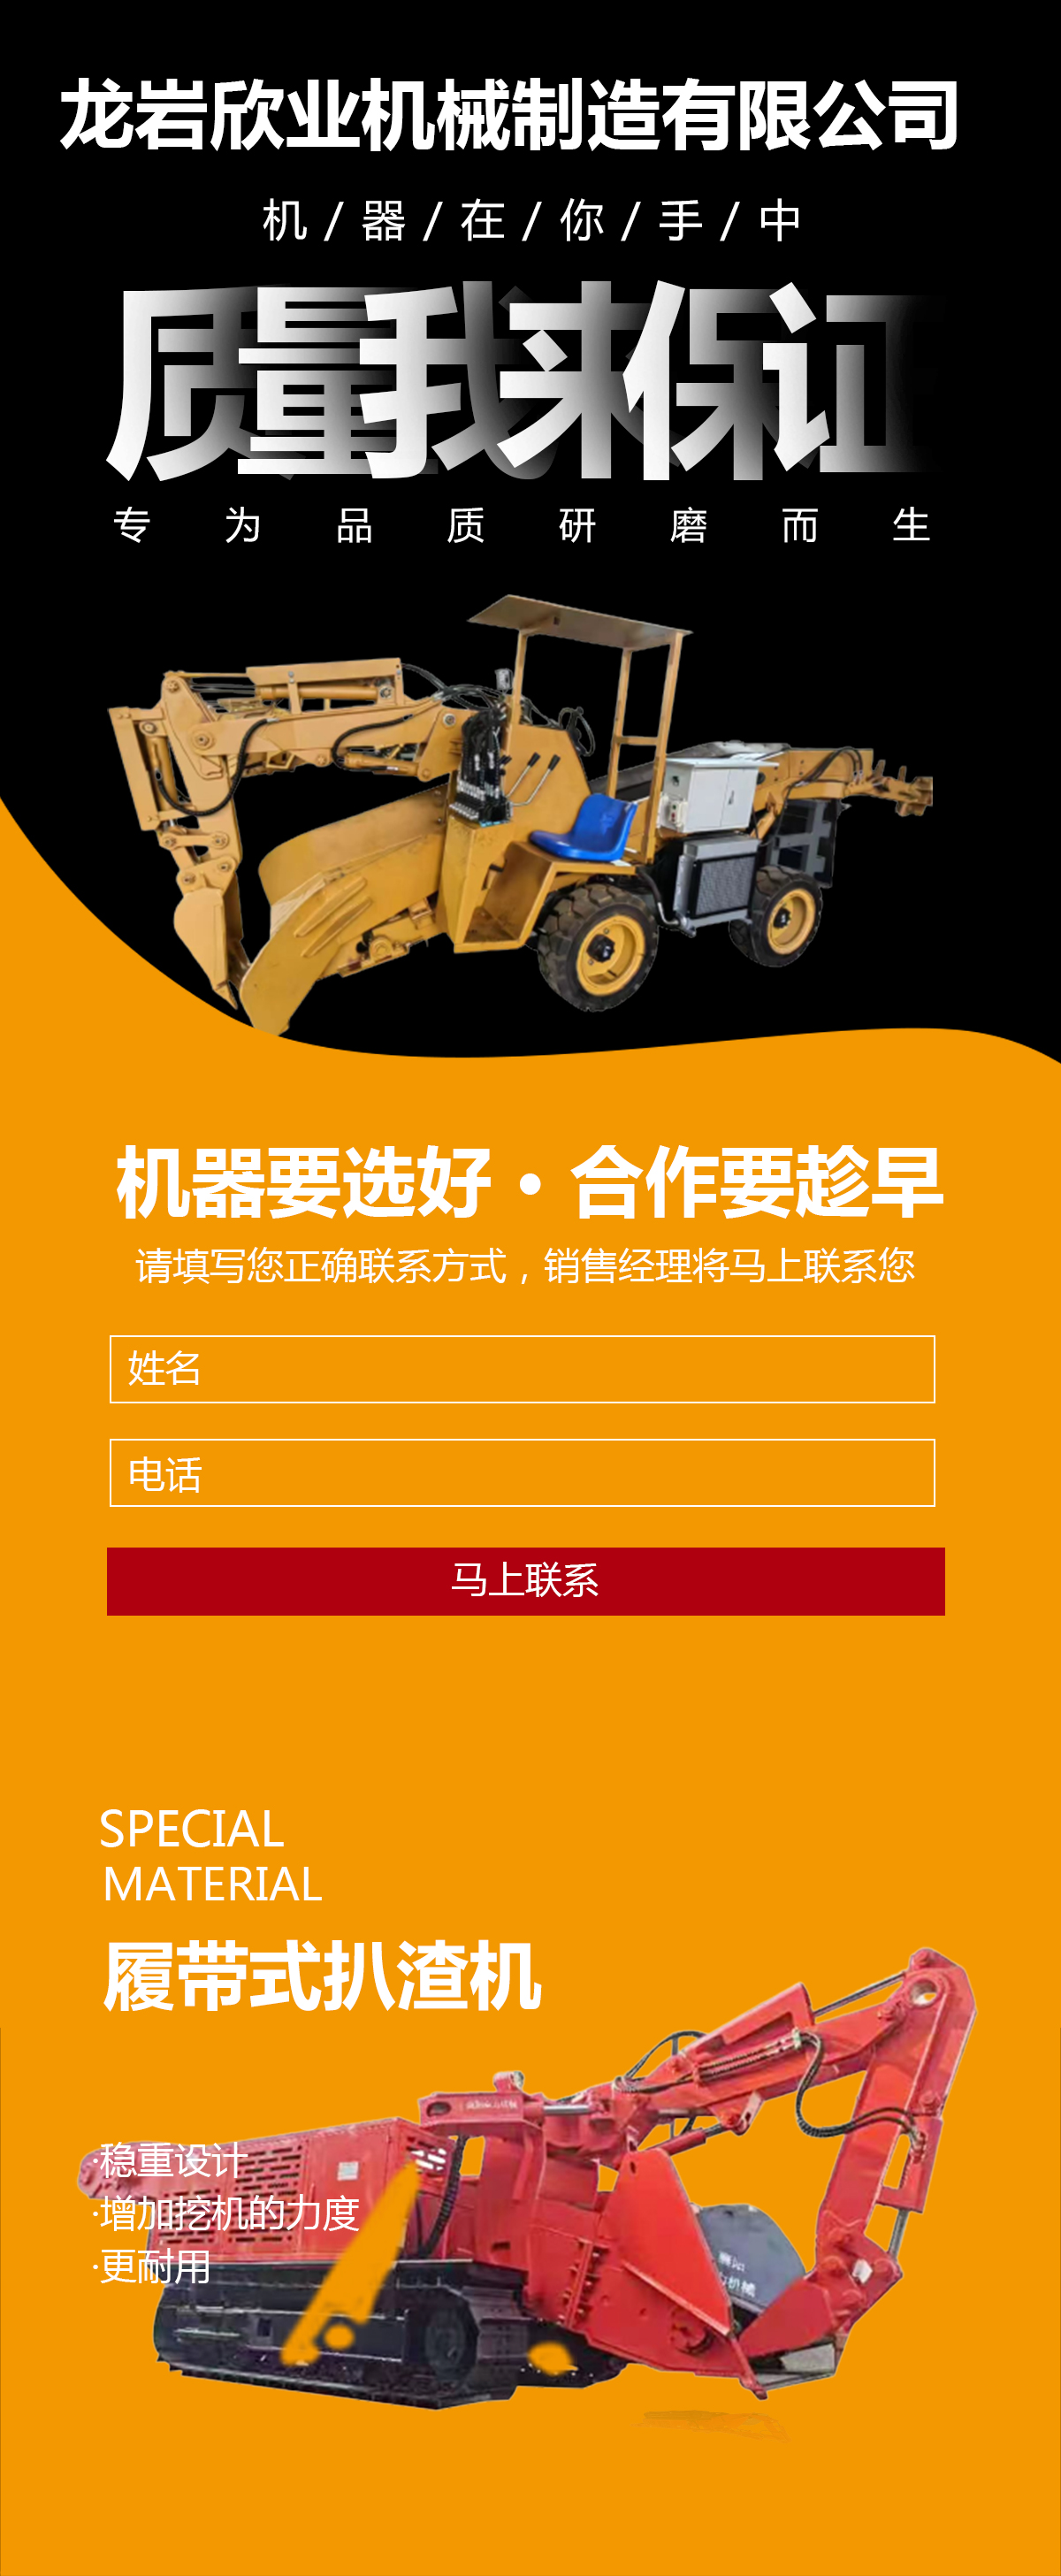 Supply of MYTx1060 MYT sawdust cylindrical sieve standard screening machine, mining machinery separation equipment